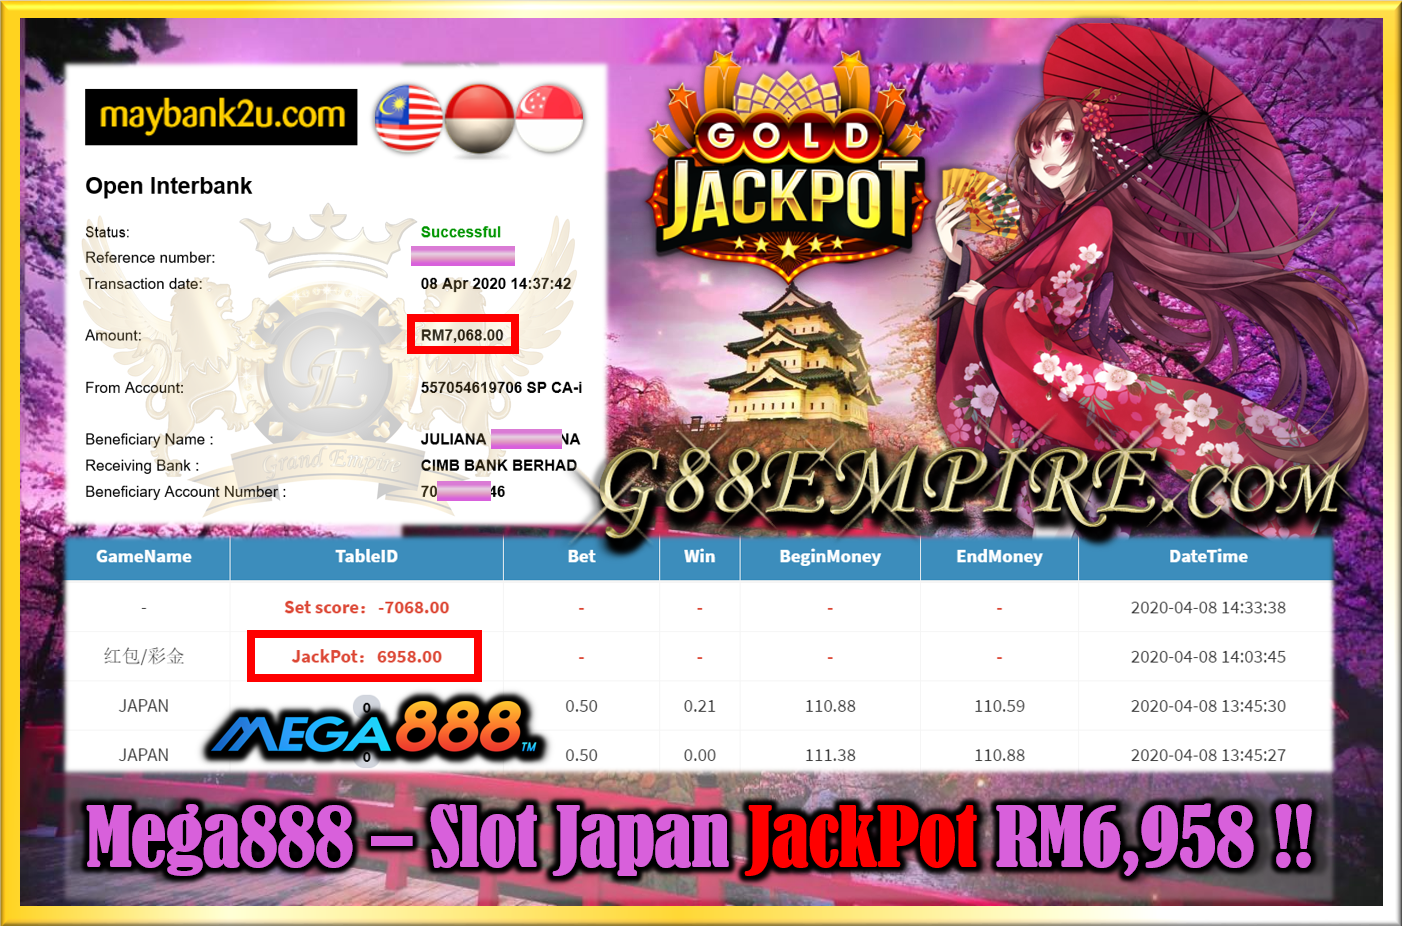 SLOT JAPAN JACKPOT RM6,958 !!